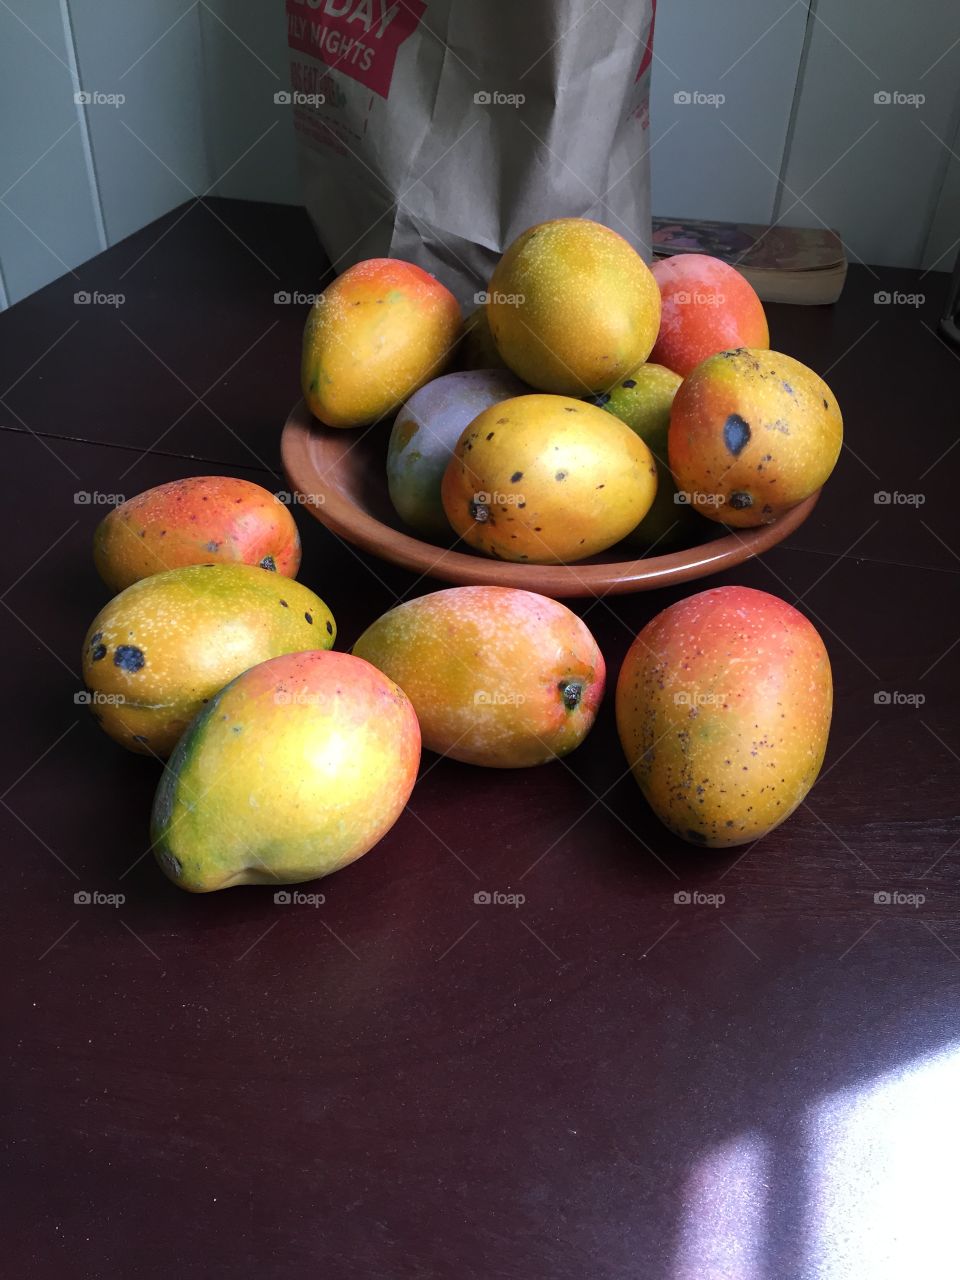 Ripe mangoes in a mahogany bowl. 
